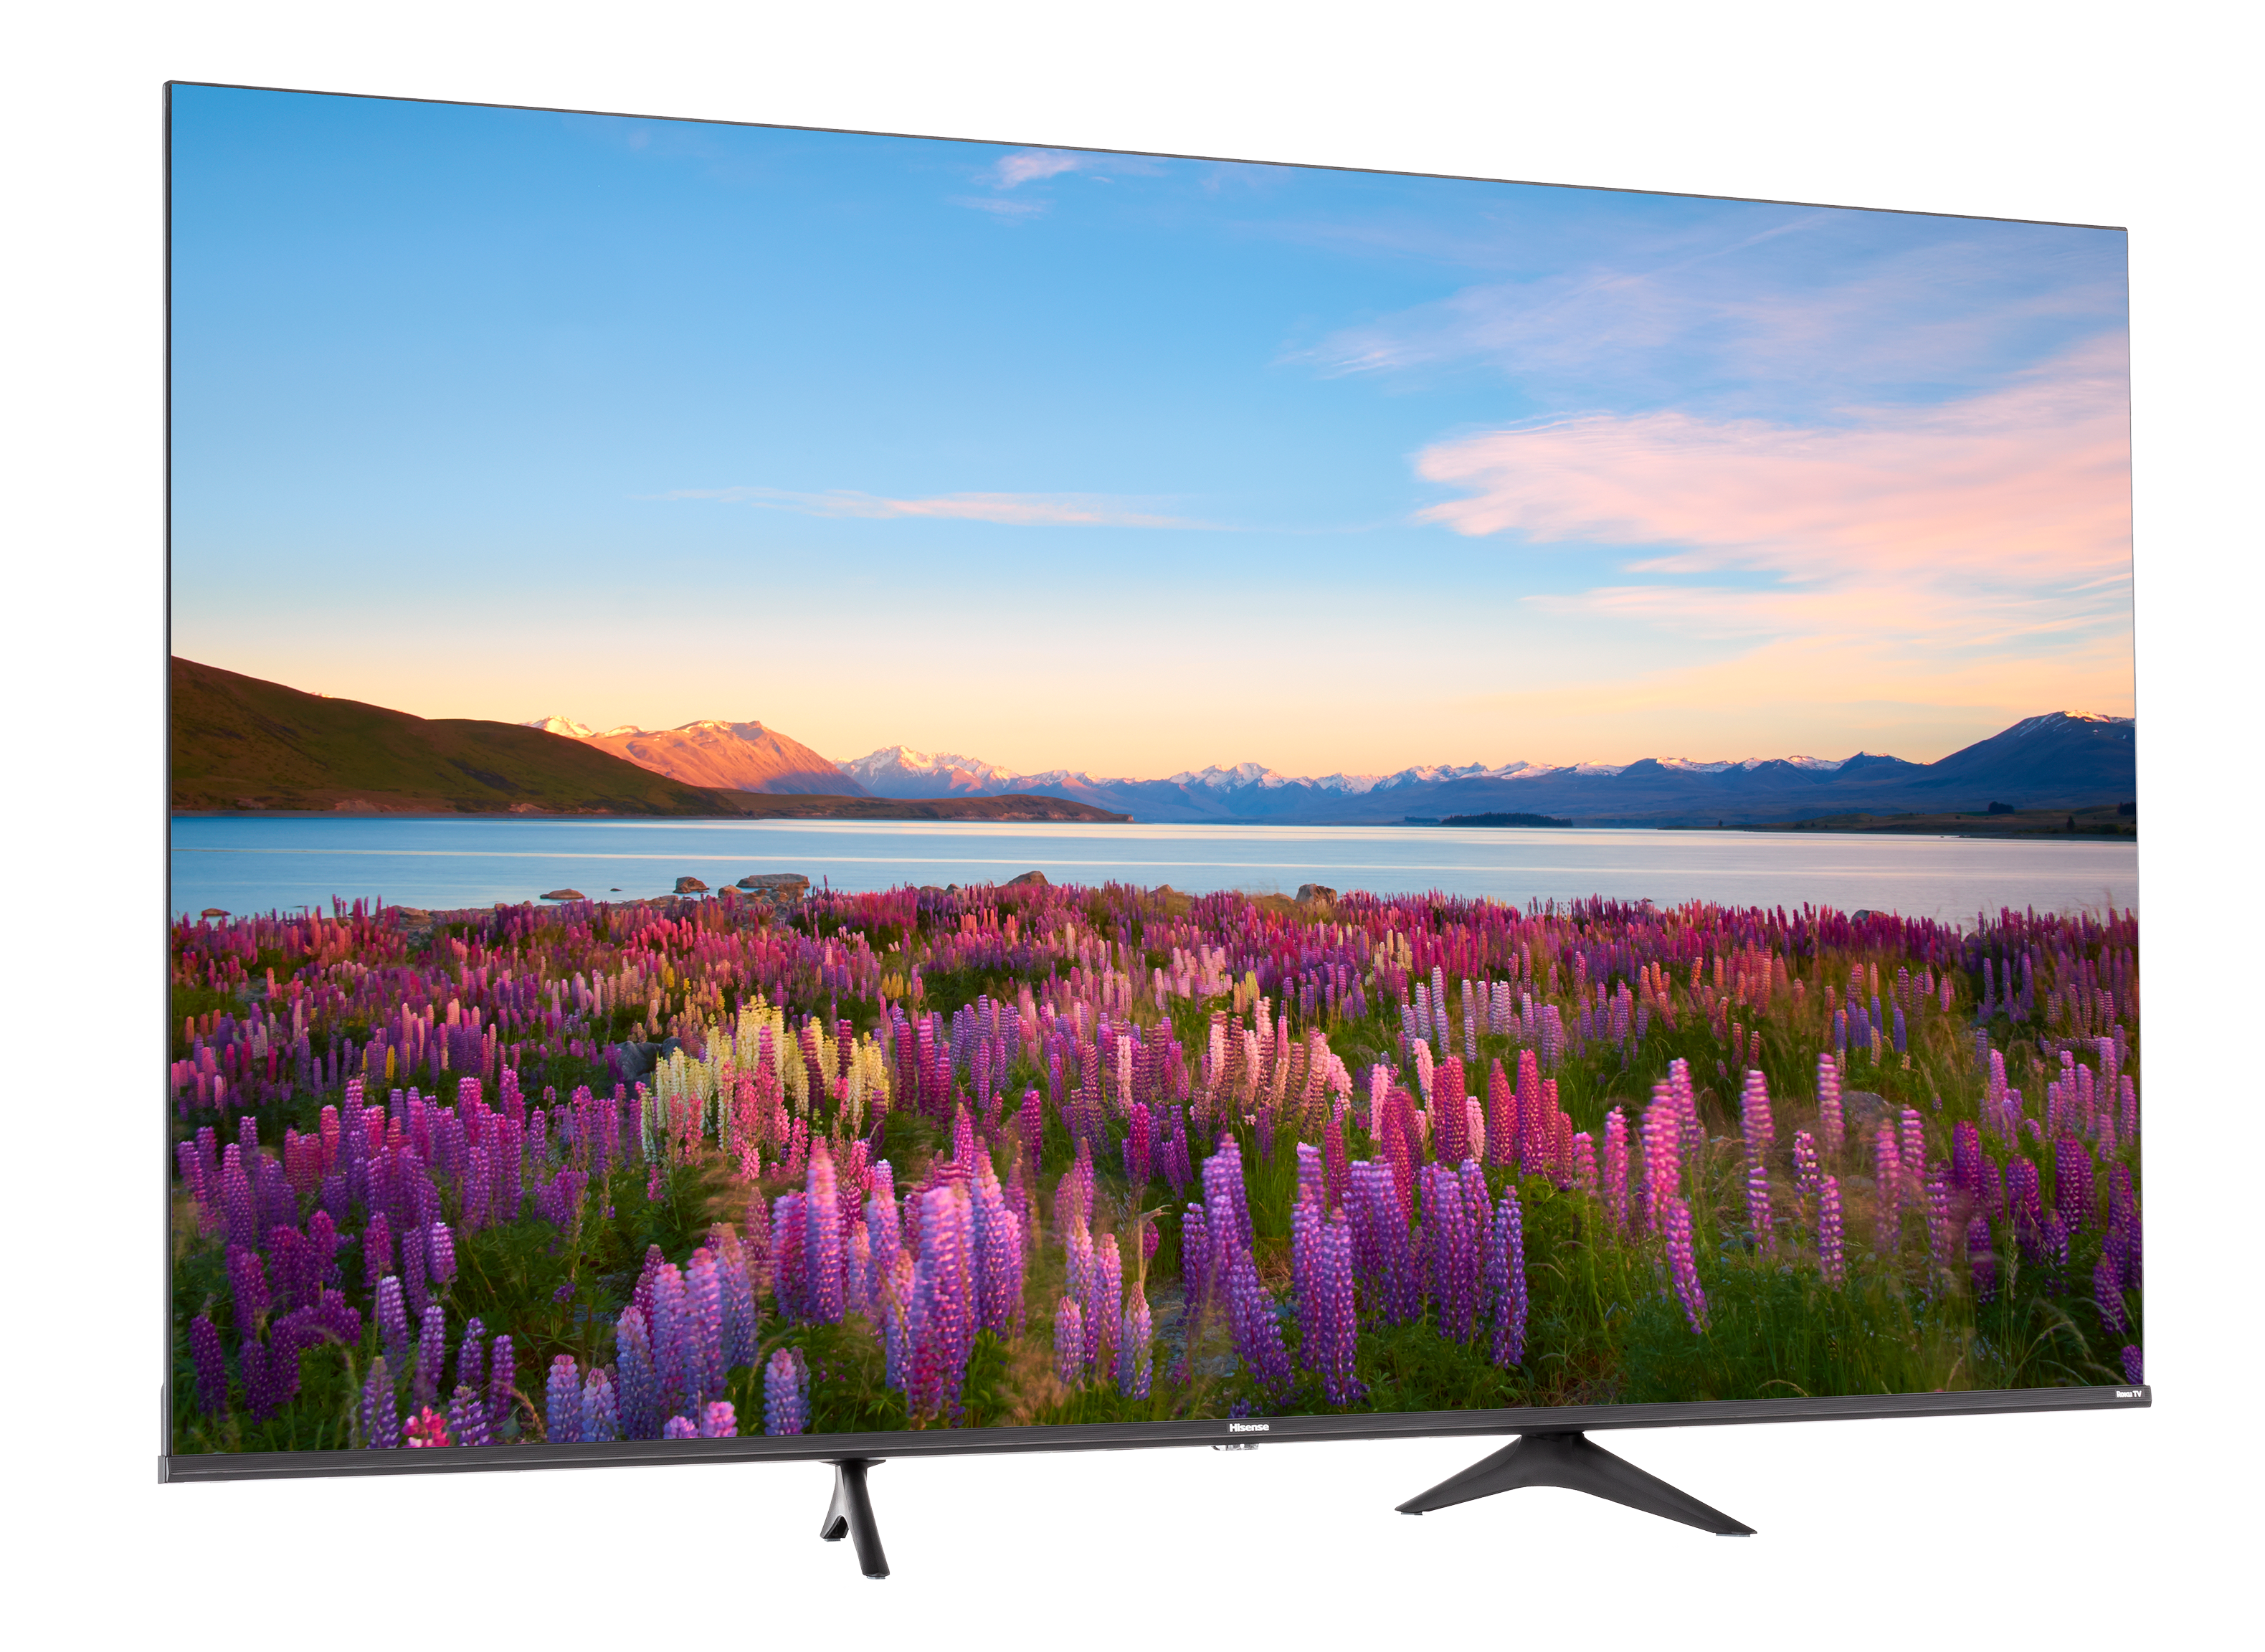 65R6E4 TV HISENSE 65" 65R6E4 LED 4K UHD/ROKU SMART TV/Dolby Vision HDR + HDR10/Alexa /Google Assistant